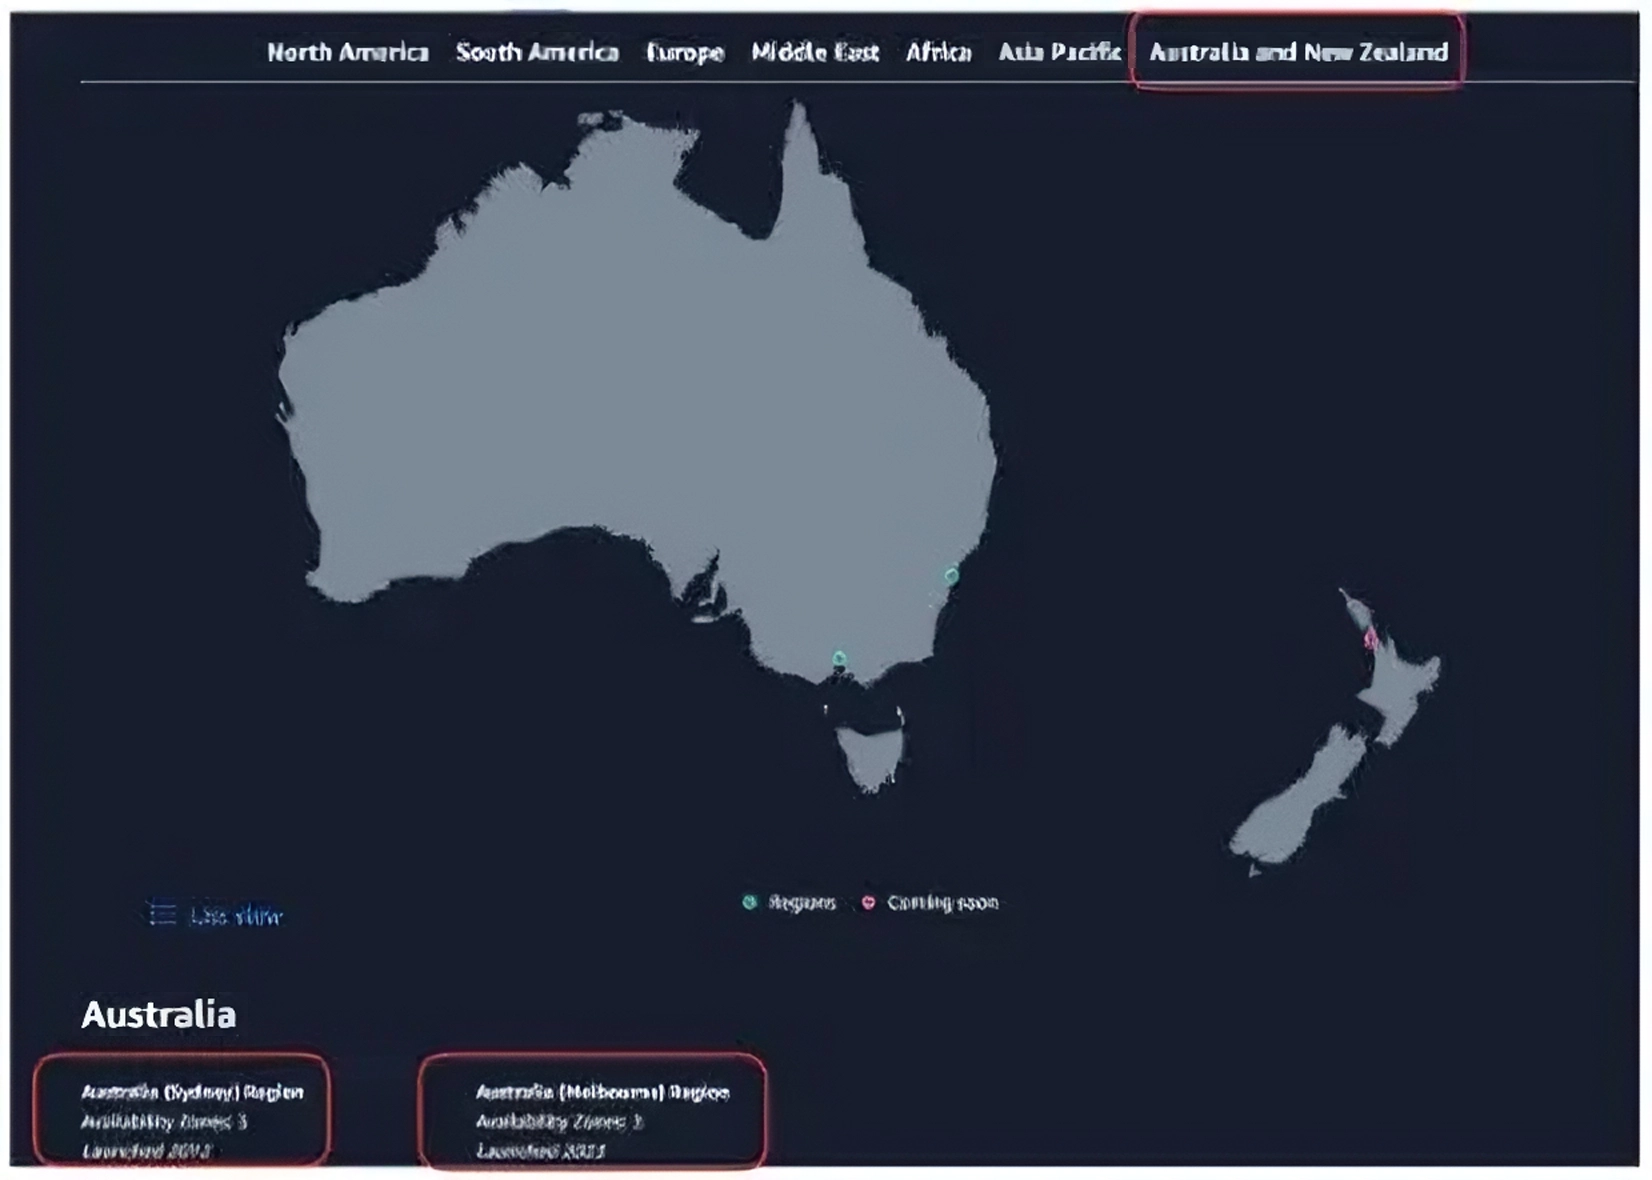 Availability Zones in Australia